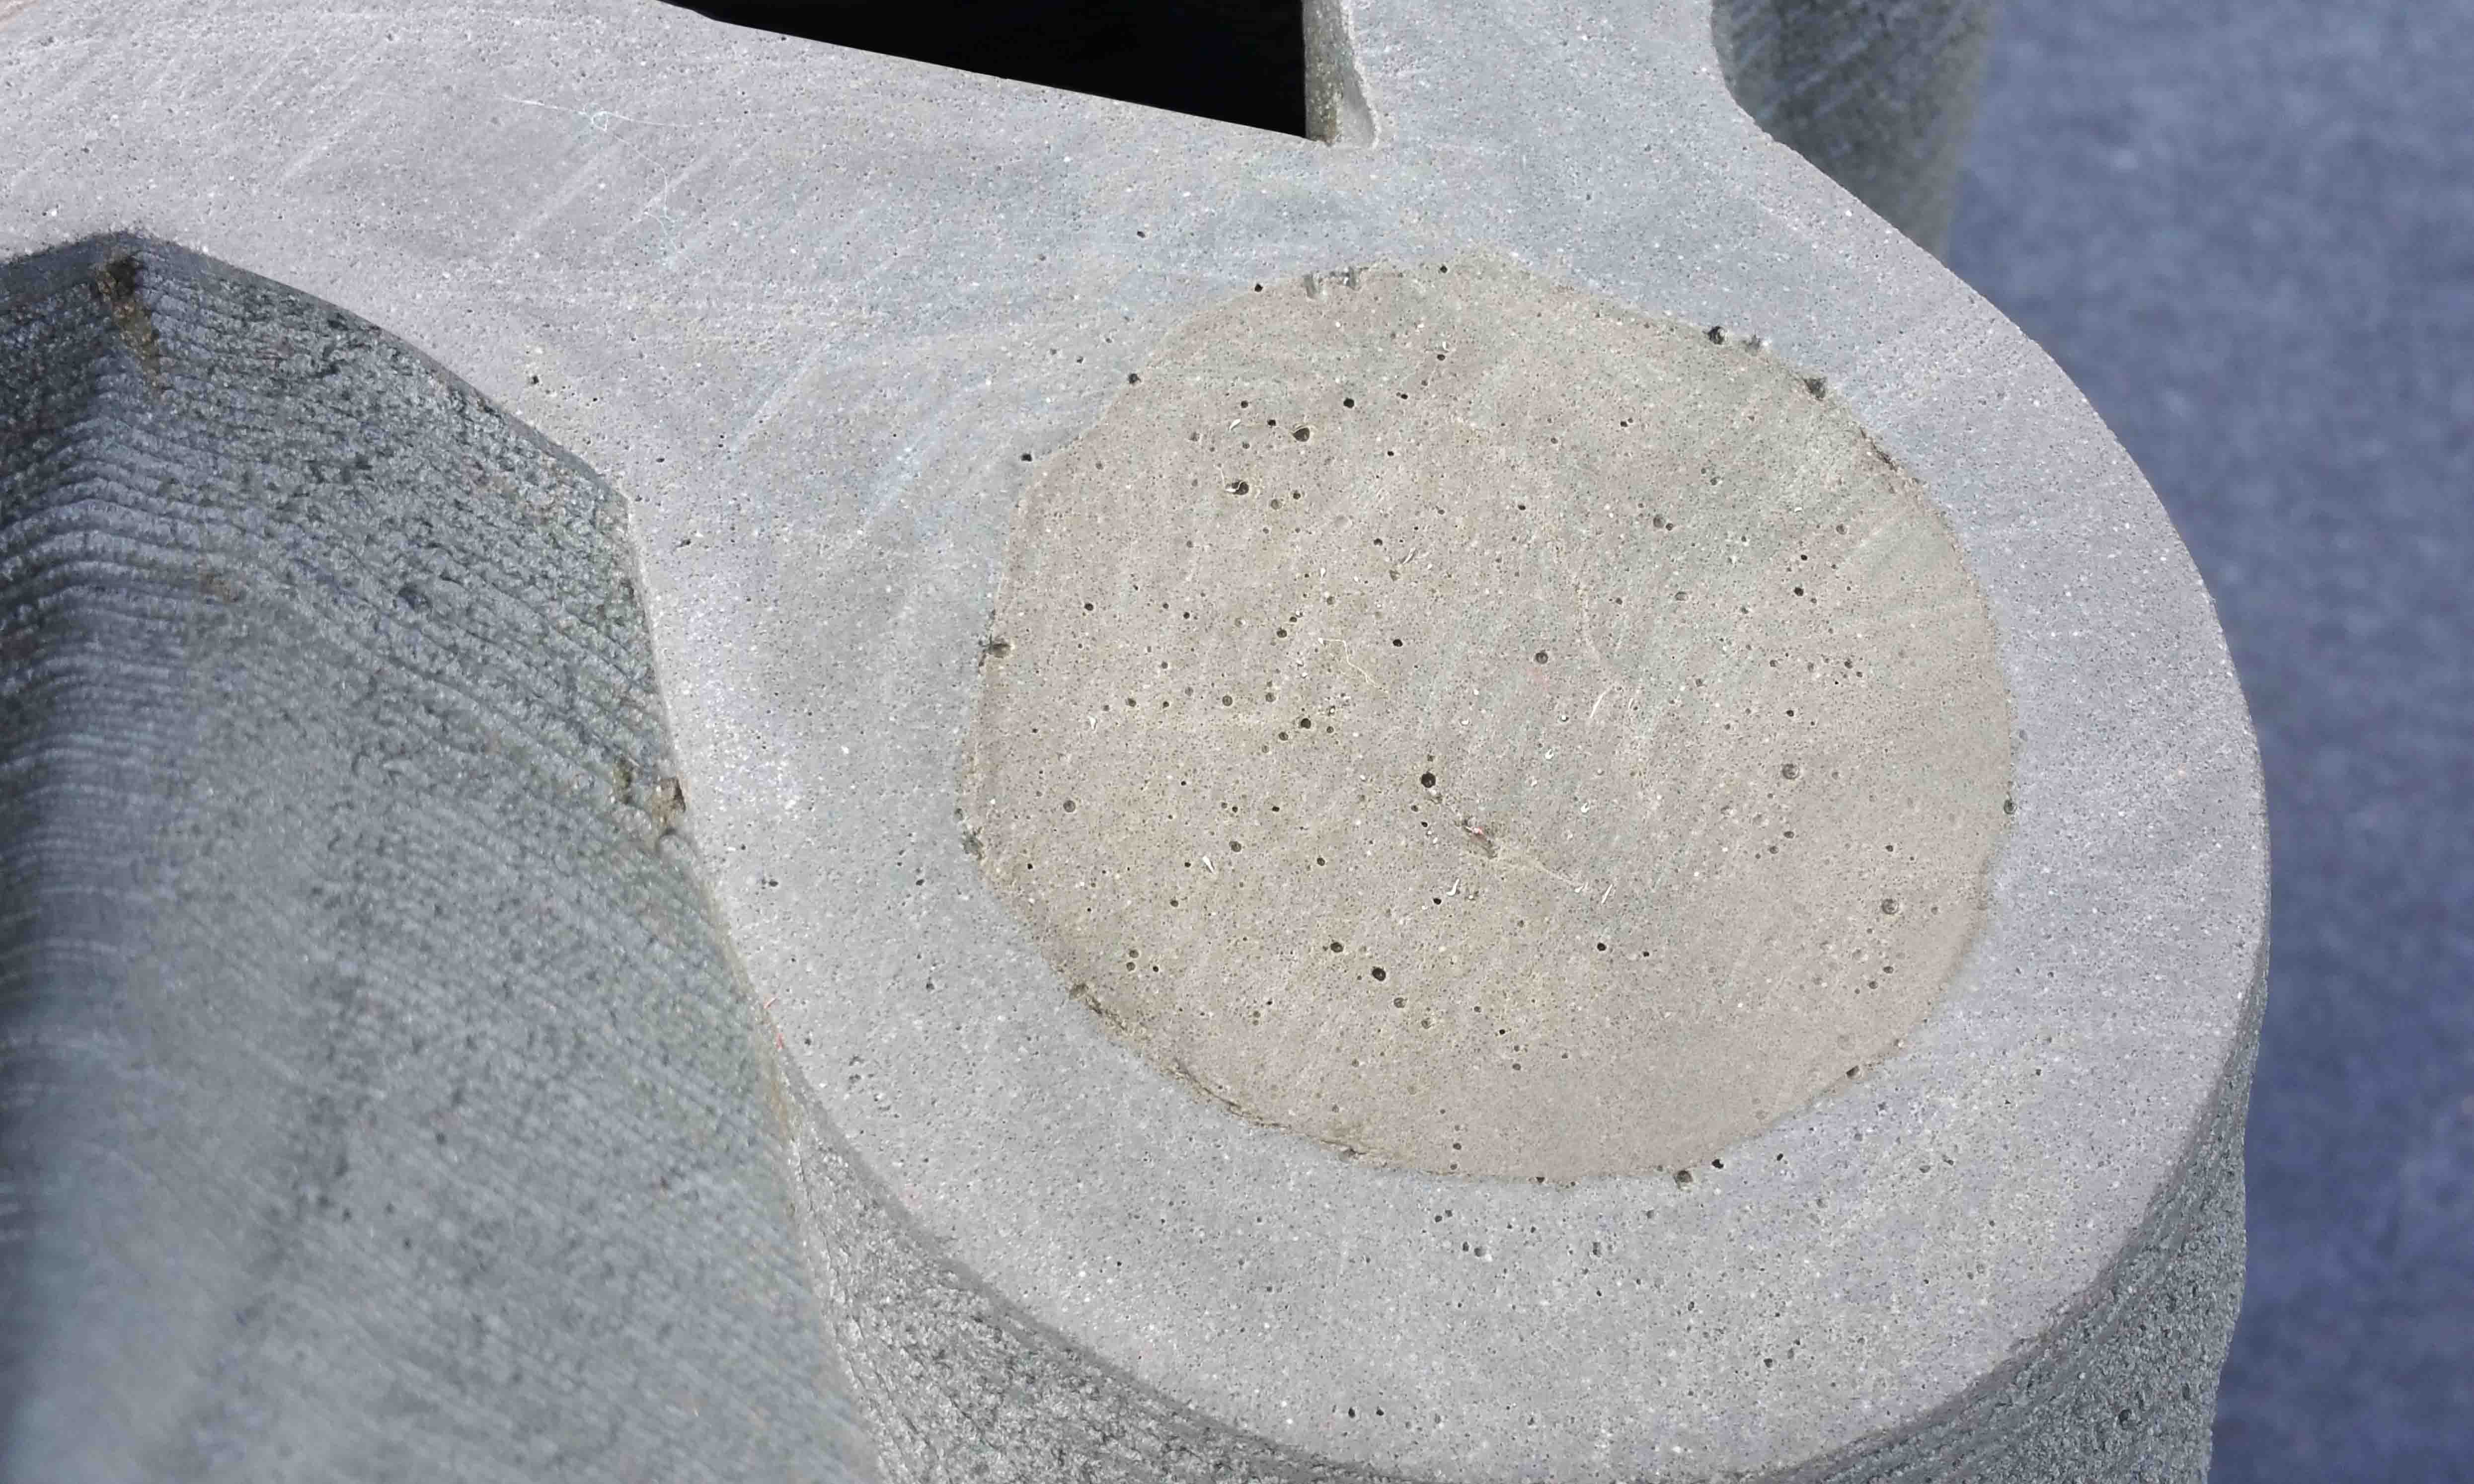 XtreeE pillar 3D print concrete